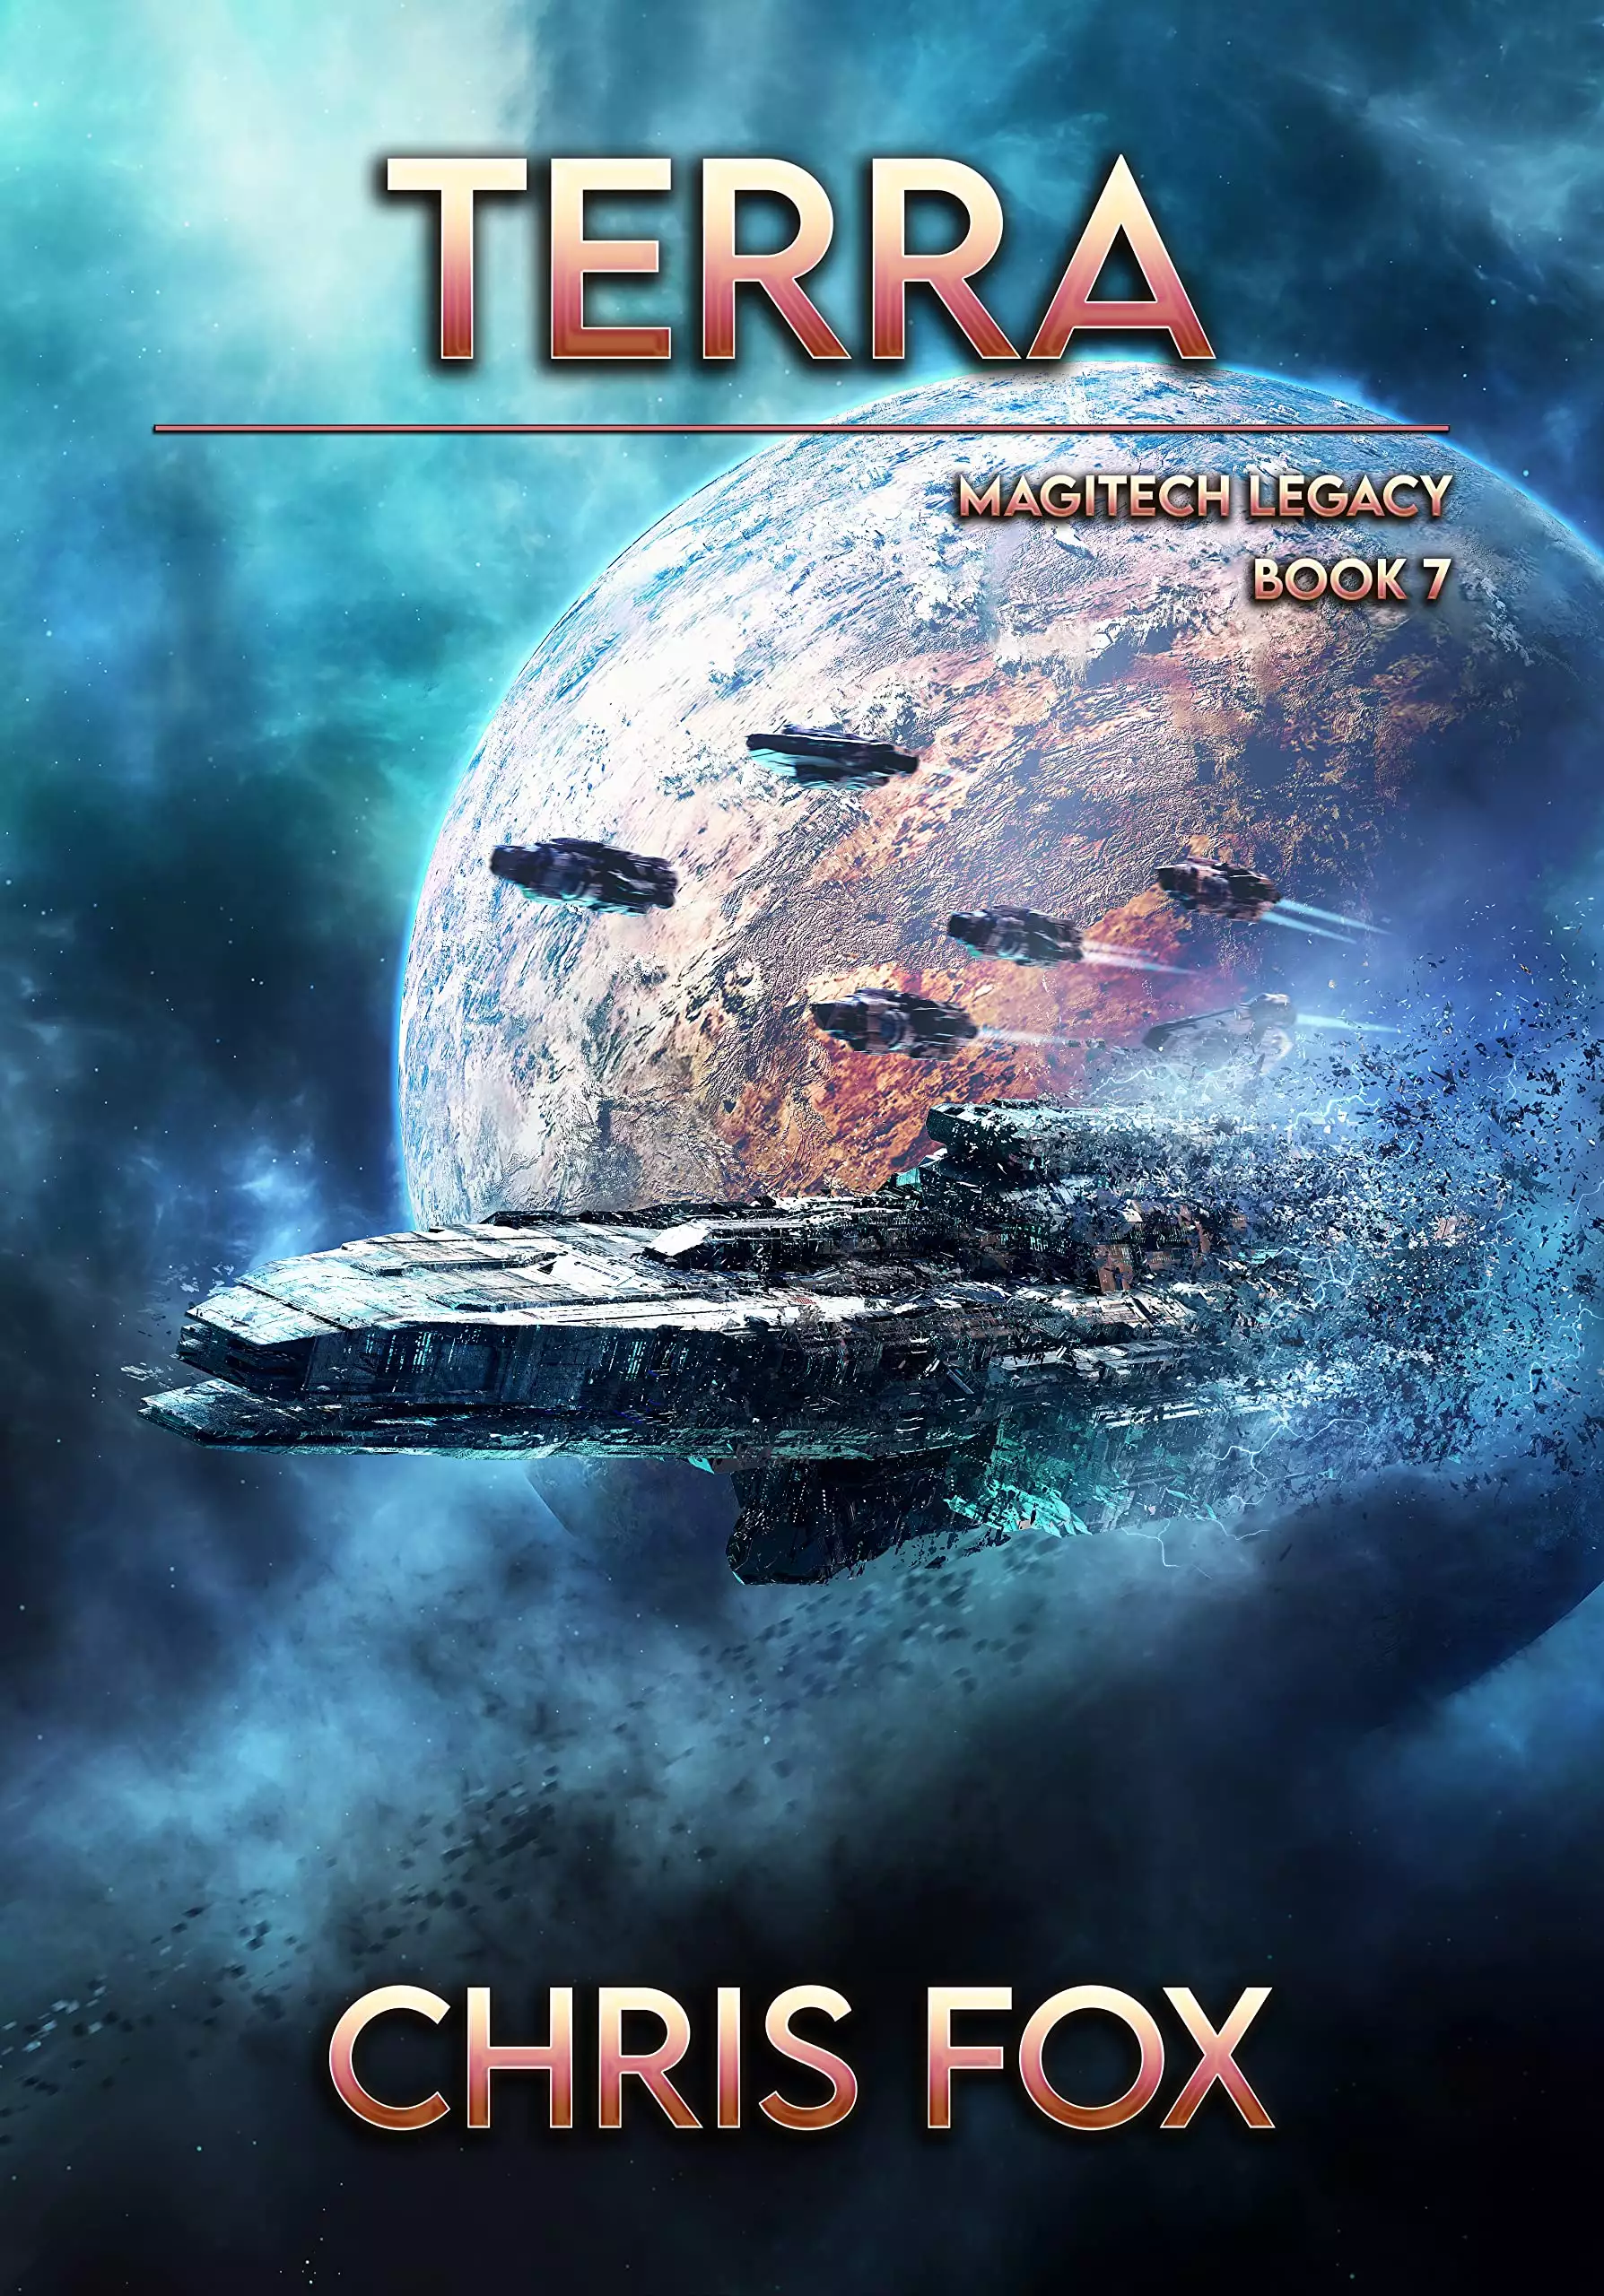 Terra: Magitech Legacy Book 7